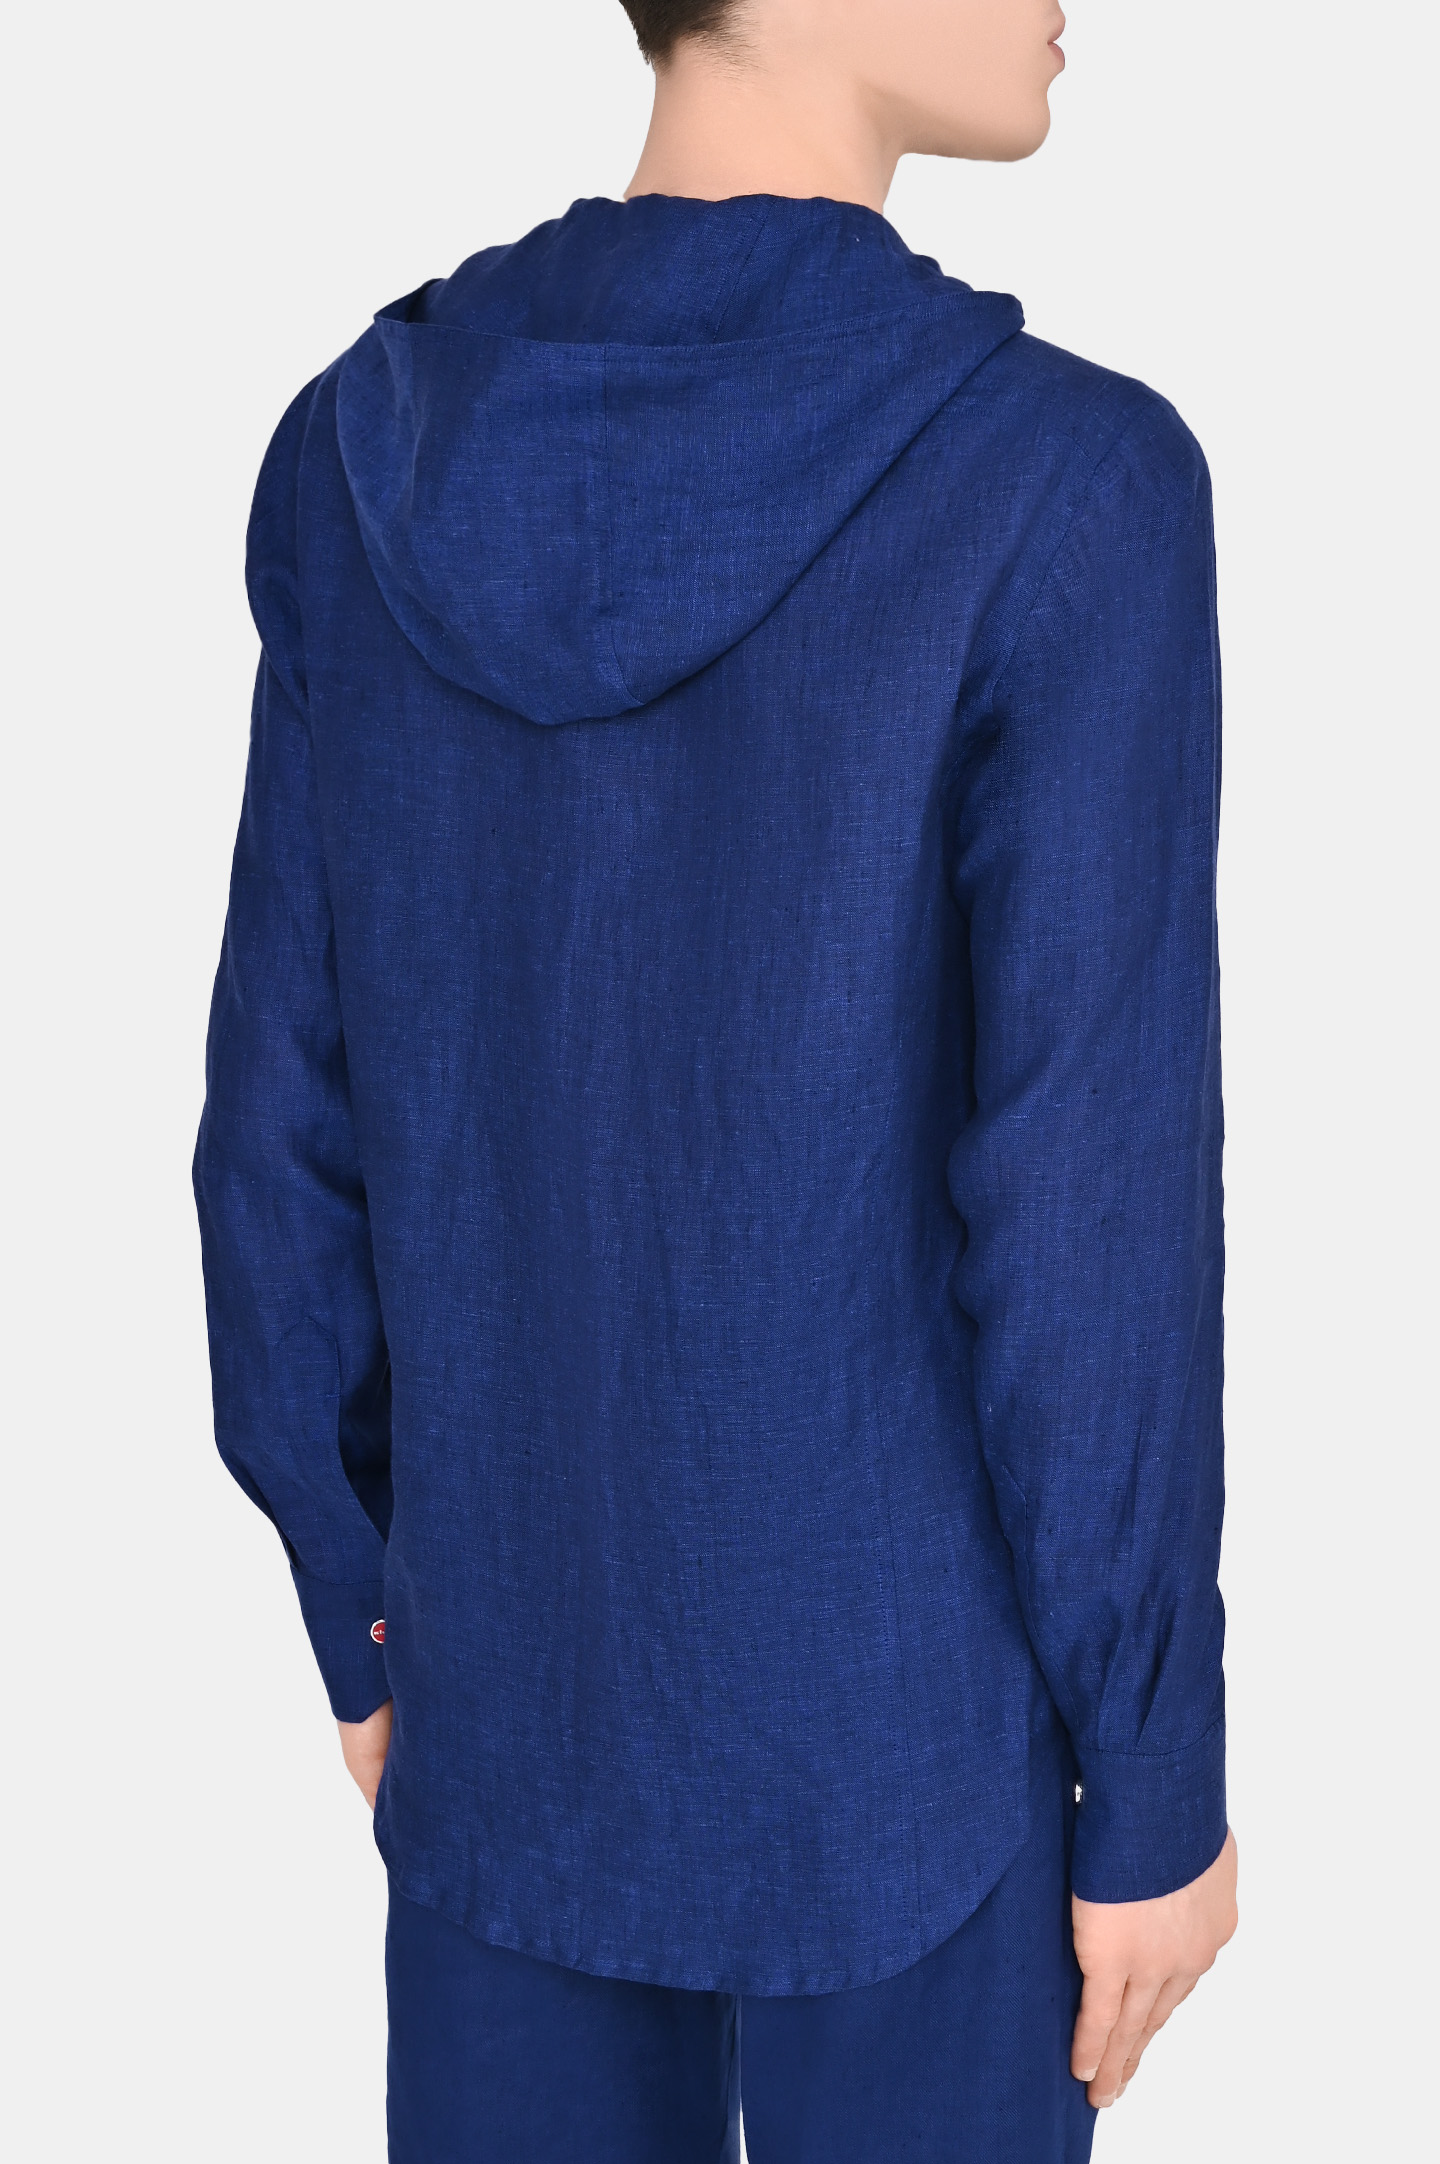 Рубашка KITON UMCMARH084010, цвет: Синий, Мужской